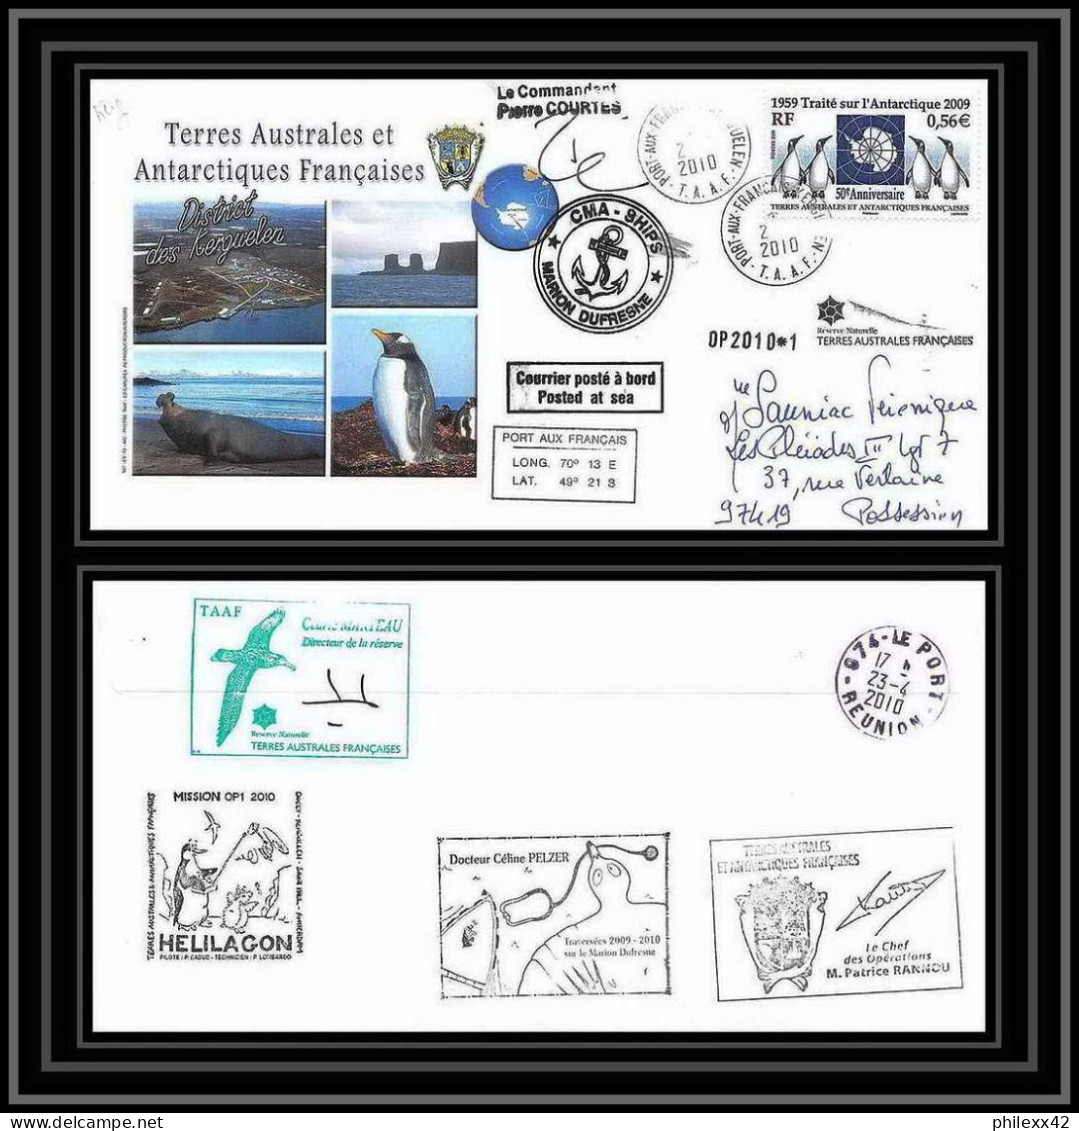 2996 Helilagon Terres Australes TAAF Lettre Cover Dufresne 2 Signé Signed Kerguelen Op 2010/1 2/4/2010 N°551 - Hubschrauber